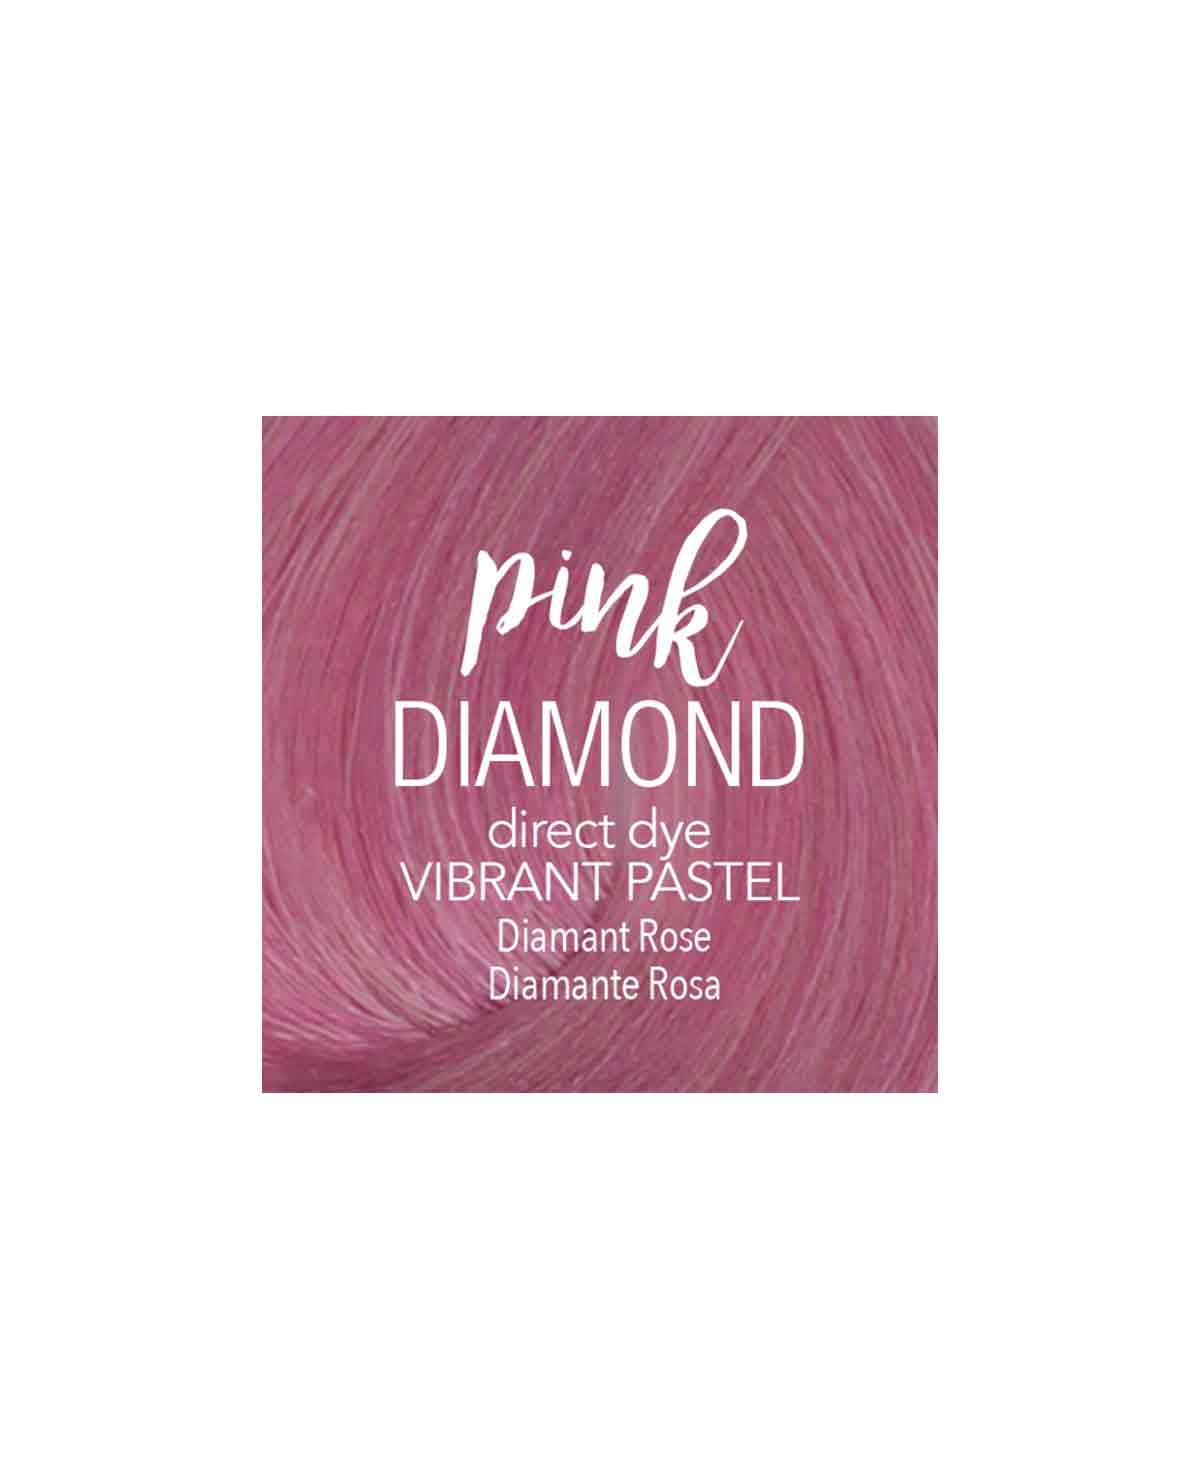 Mydentity - SPDD Pink Diamond 